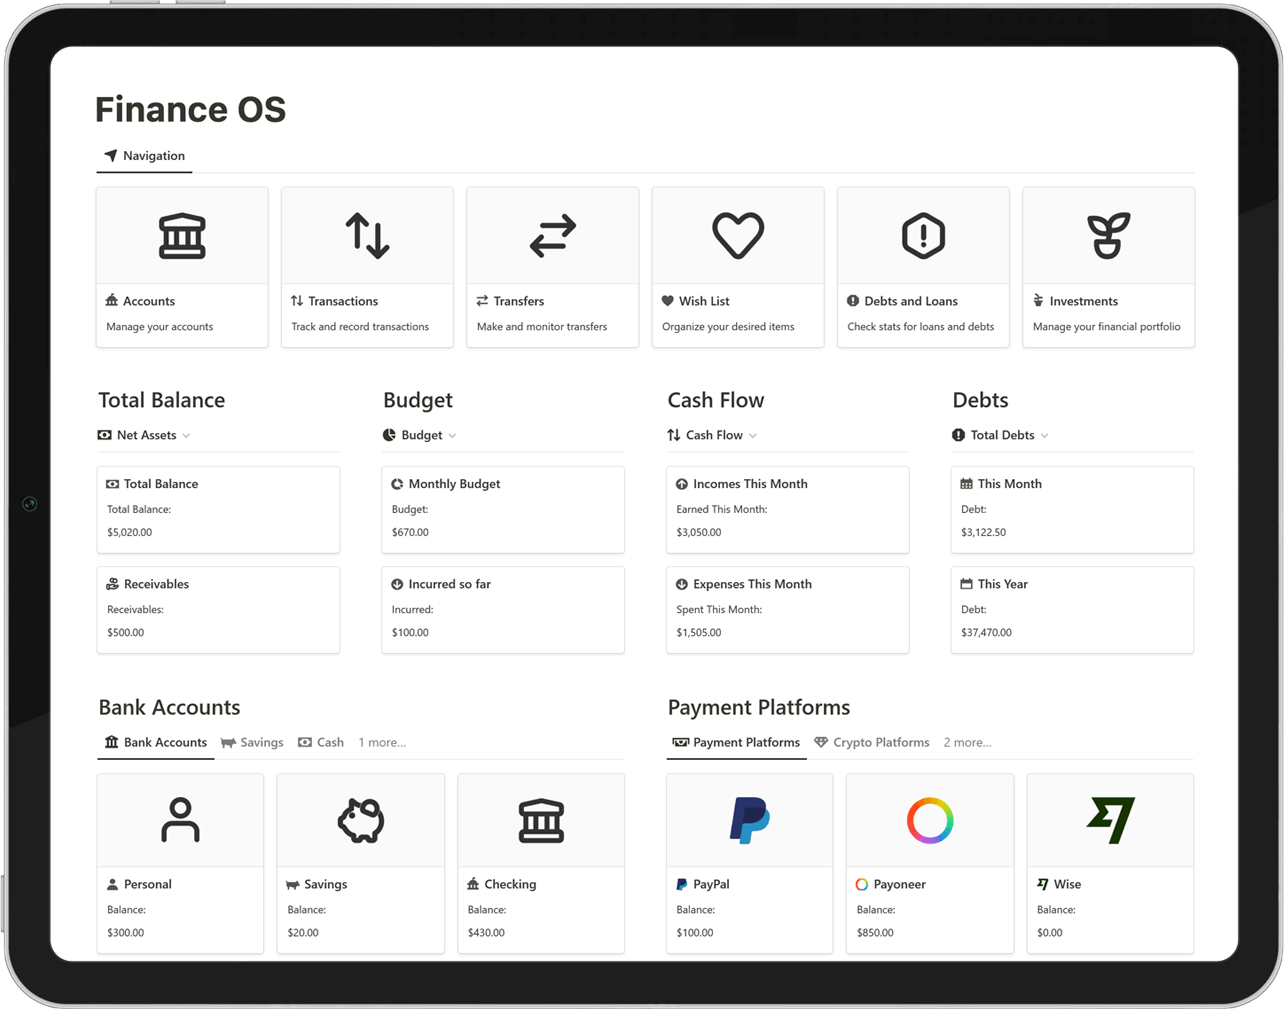 Finance OS